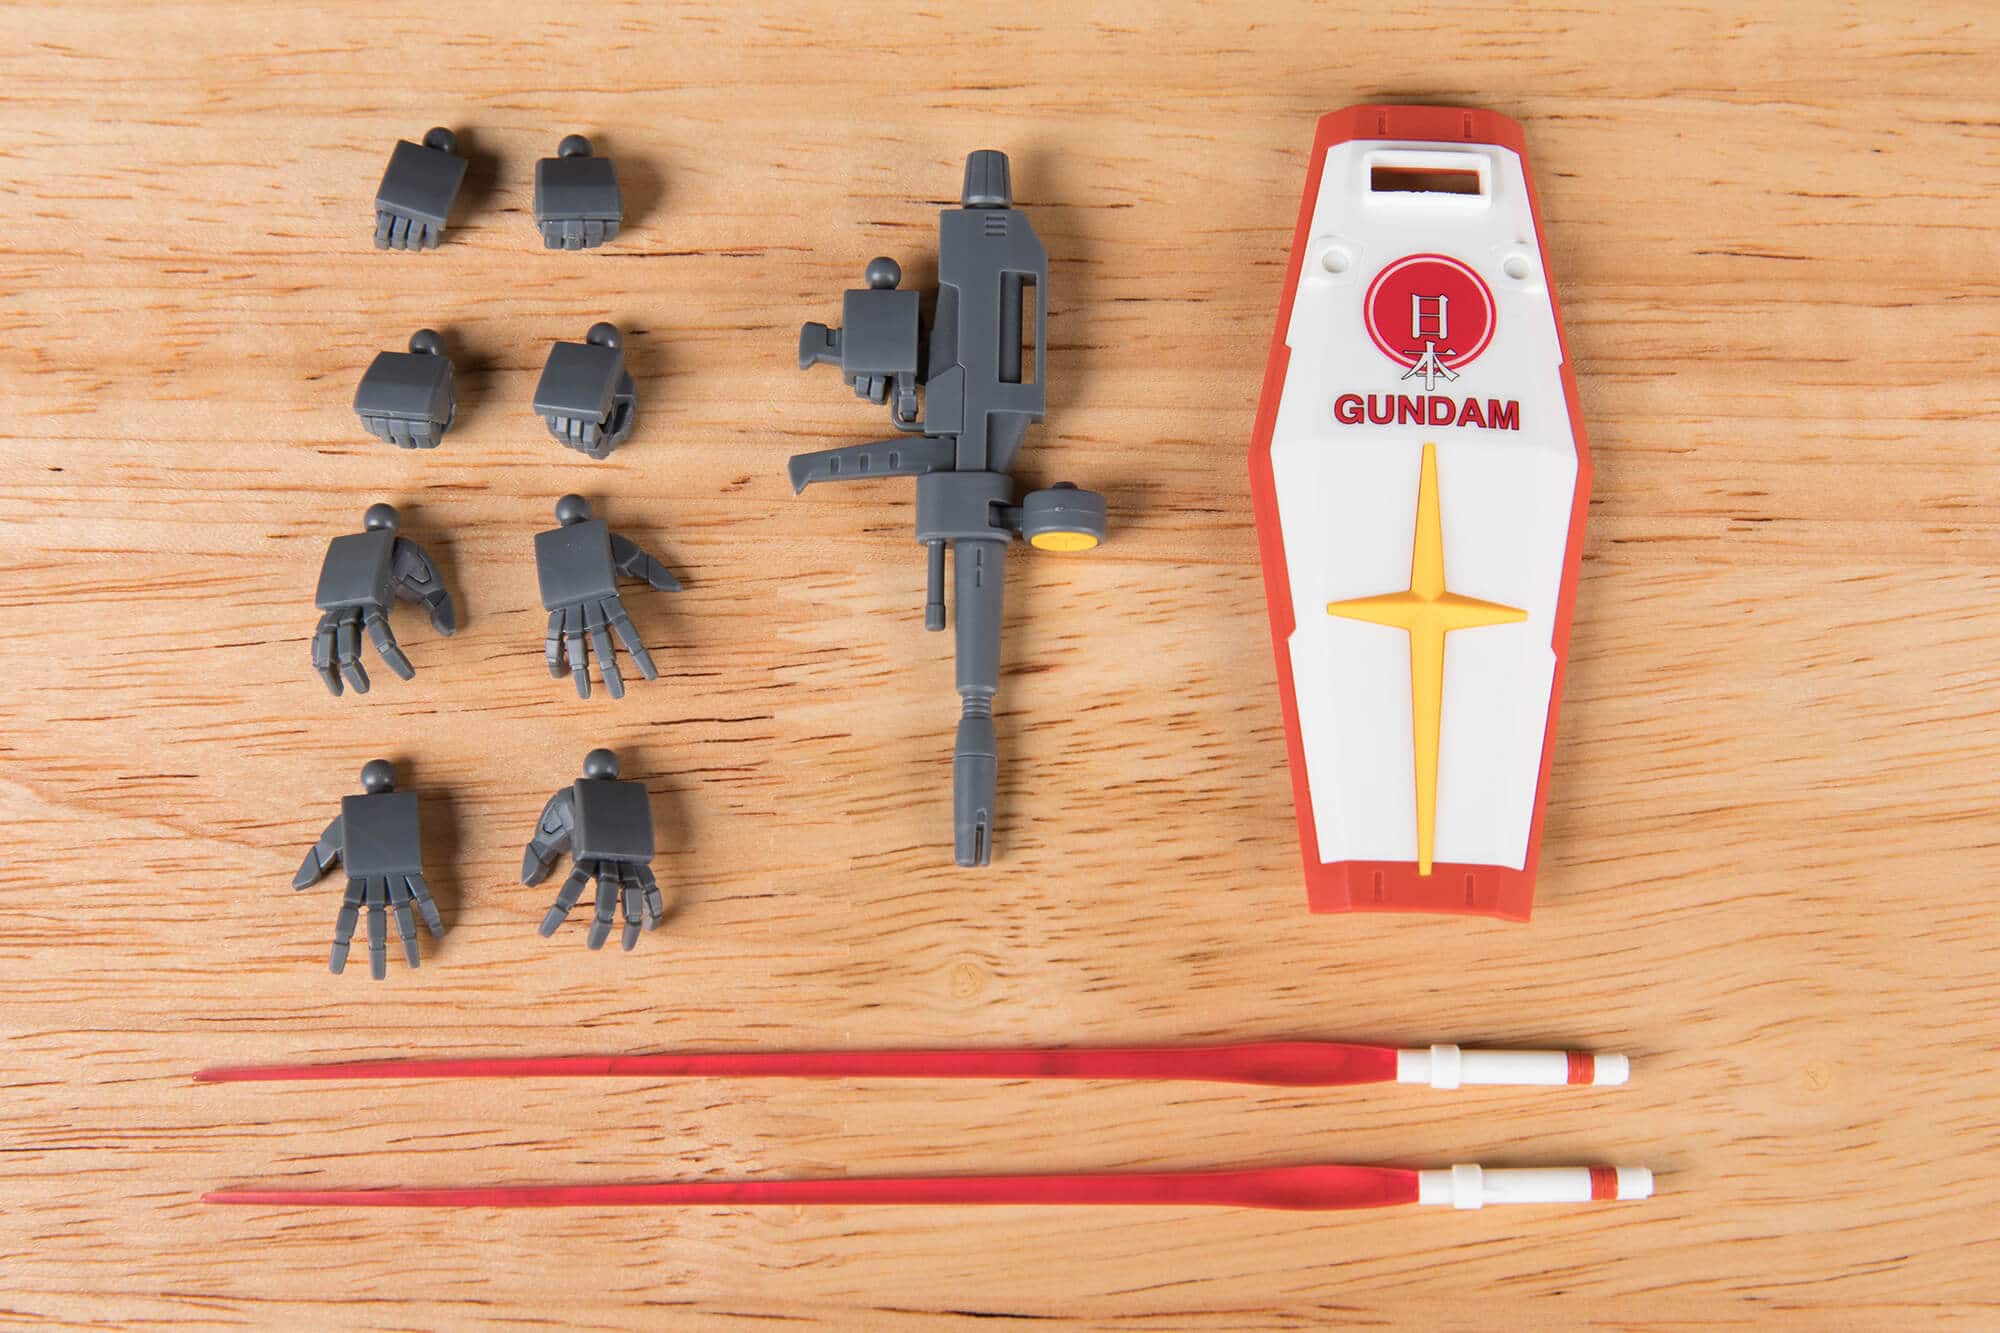 HG RX-78-2 Gundam [PR ambassador of the Japan Pavilion, Expo 2020 Dubai] Gundam Model Kit Weapons